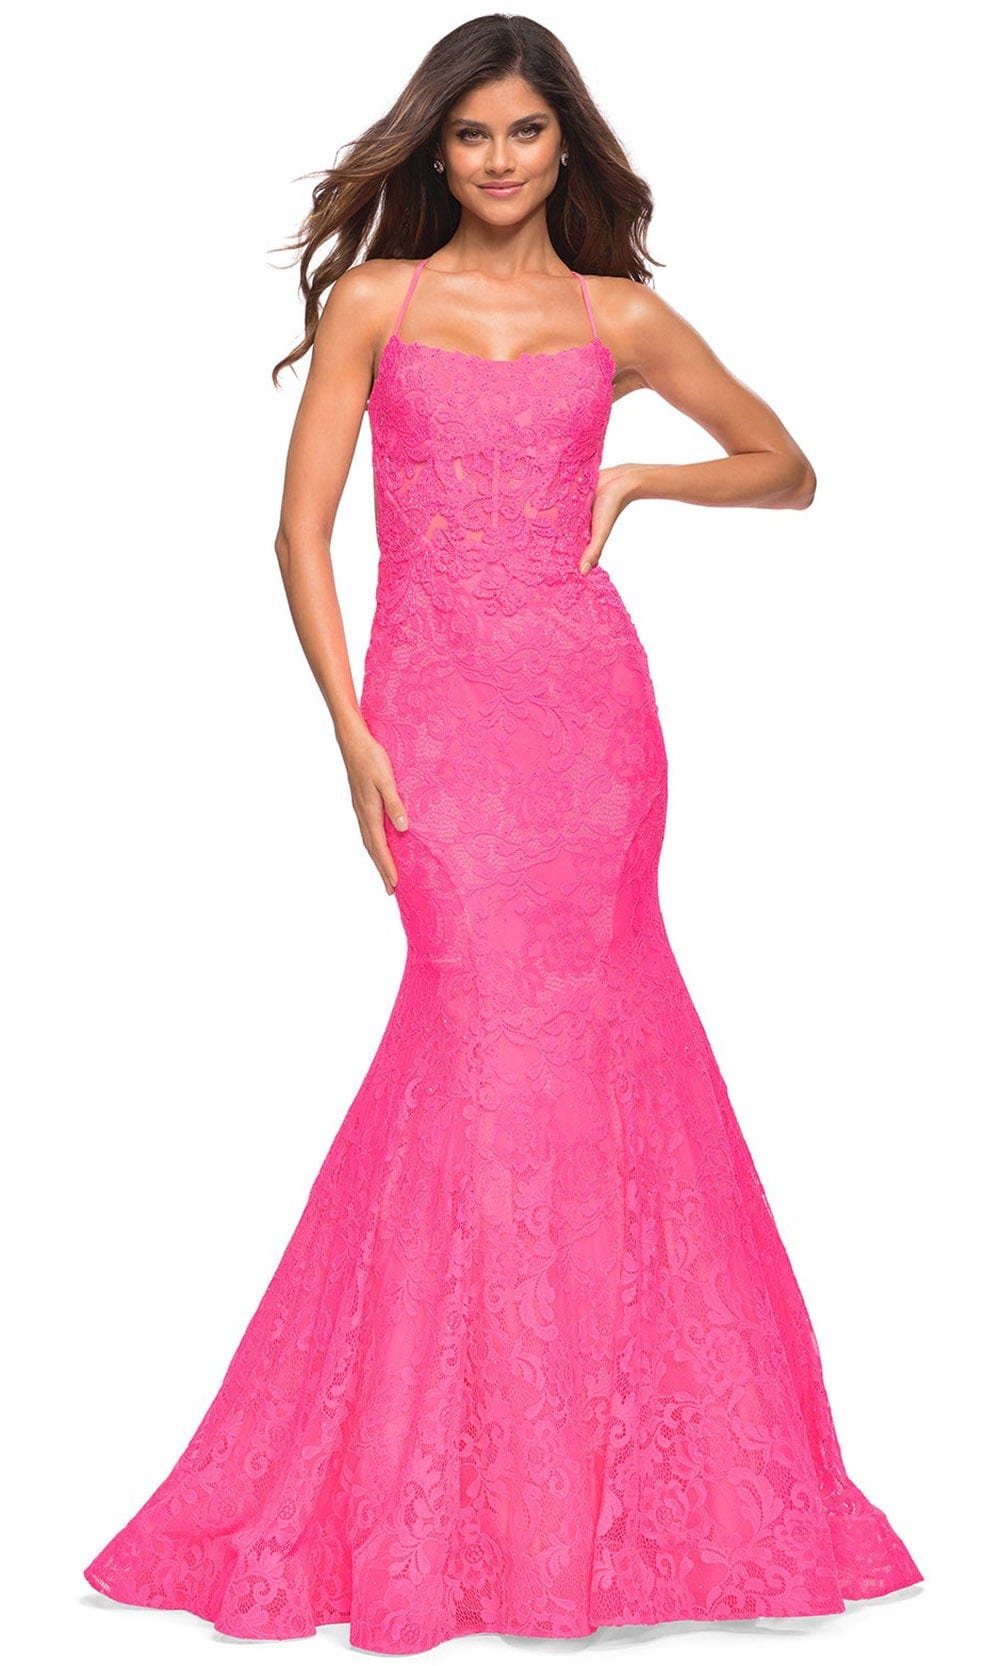 La Femme 30605 - Square Trumpet Evening Dress Special Occasion Dress 00 / Neon Pink